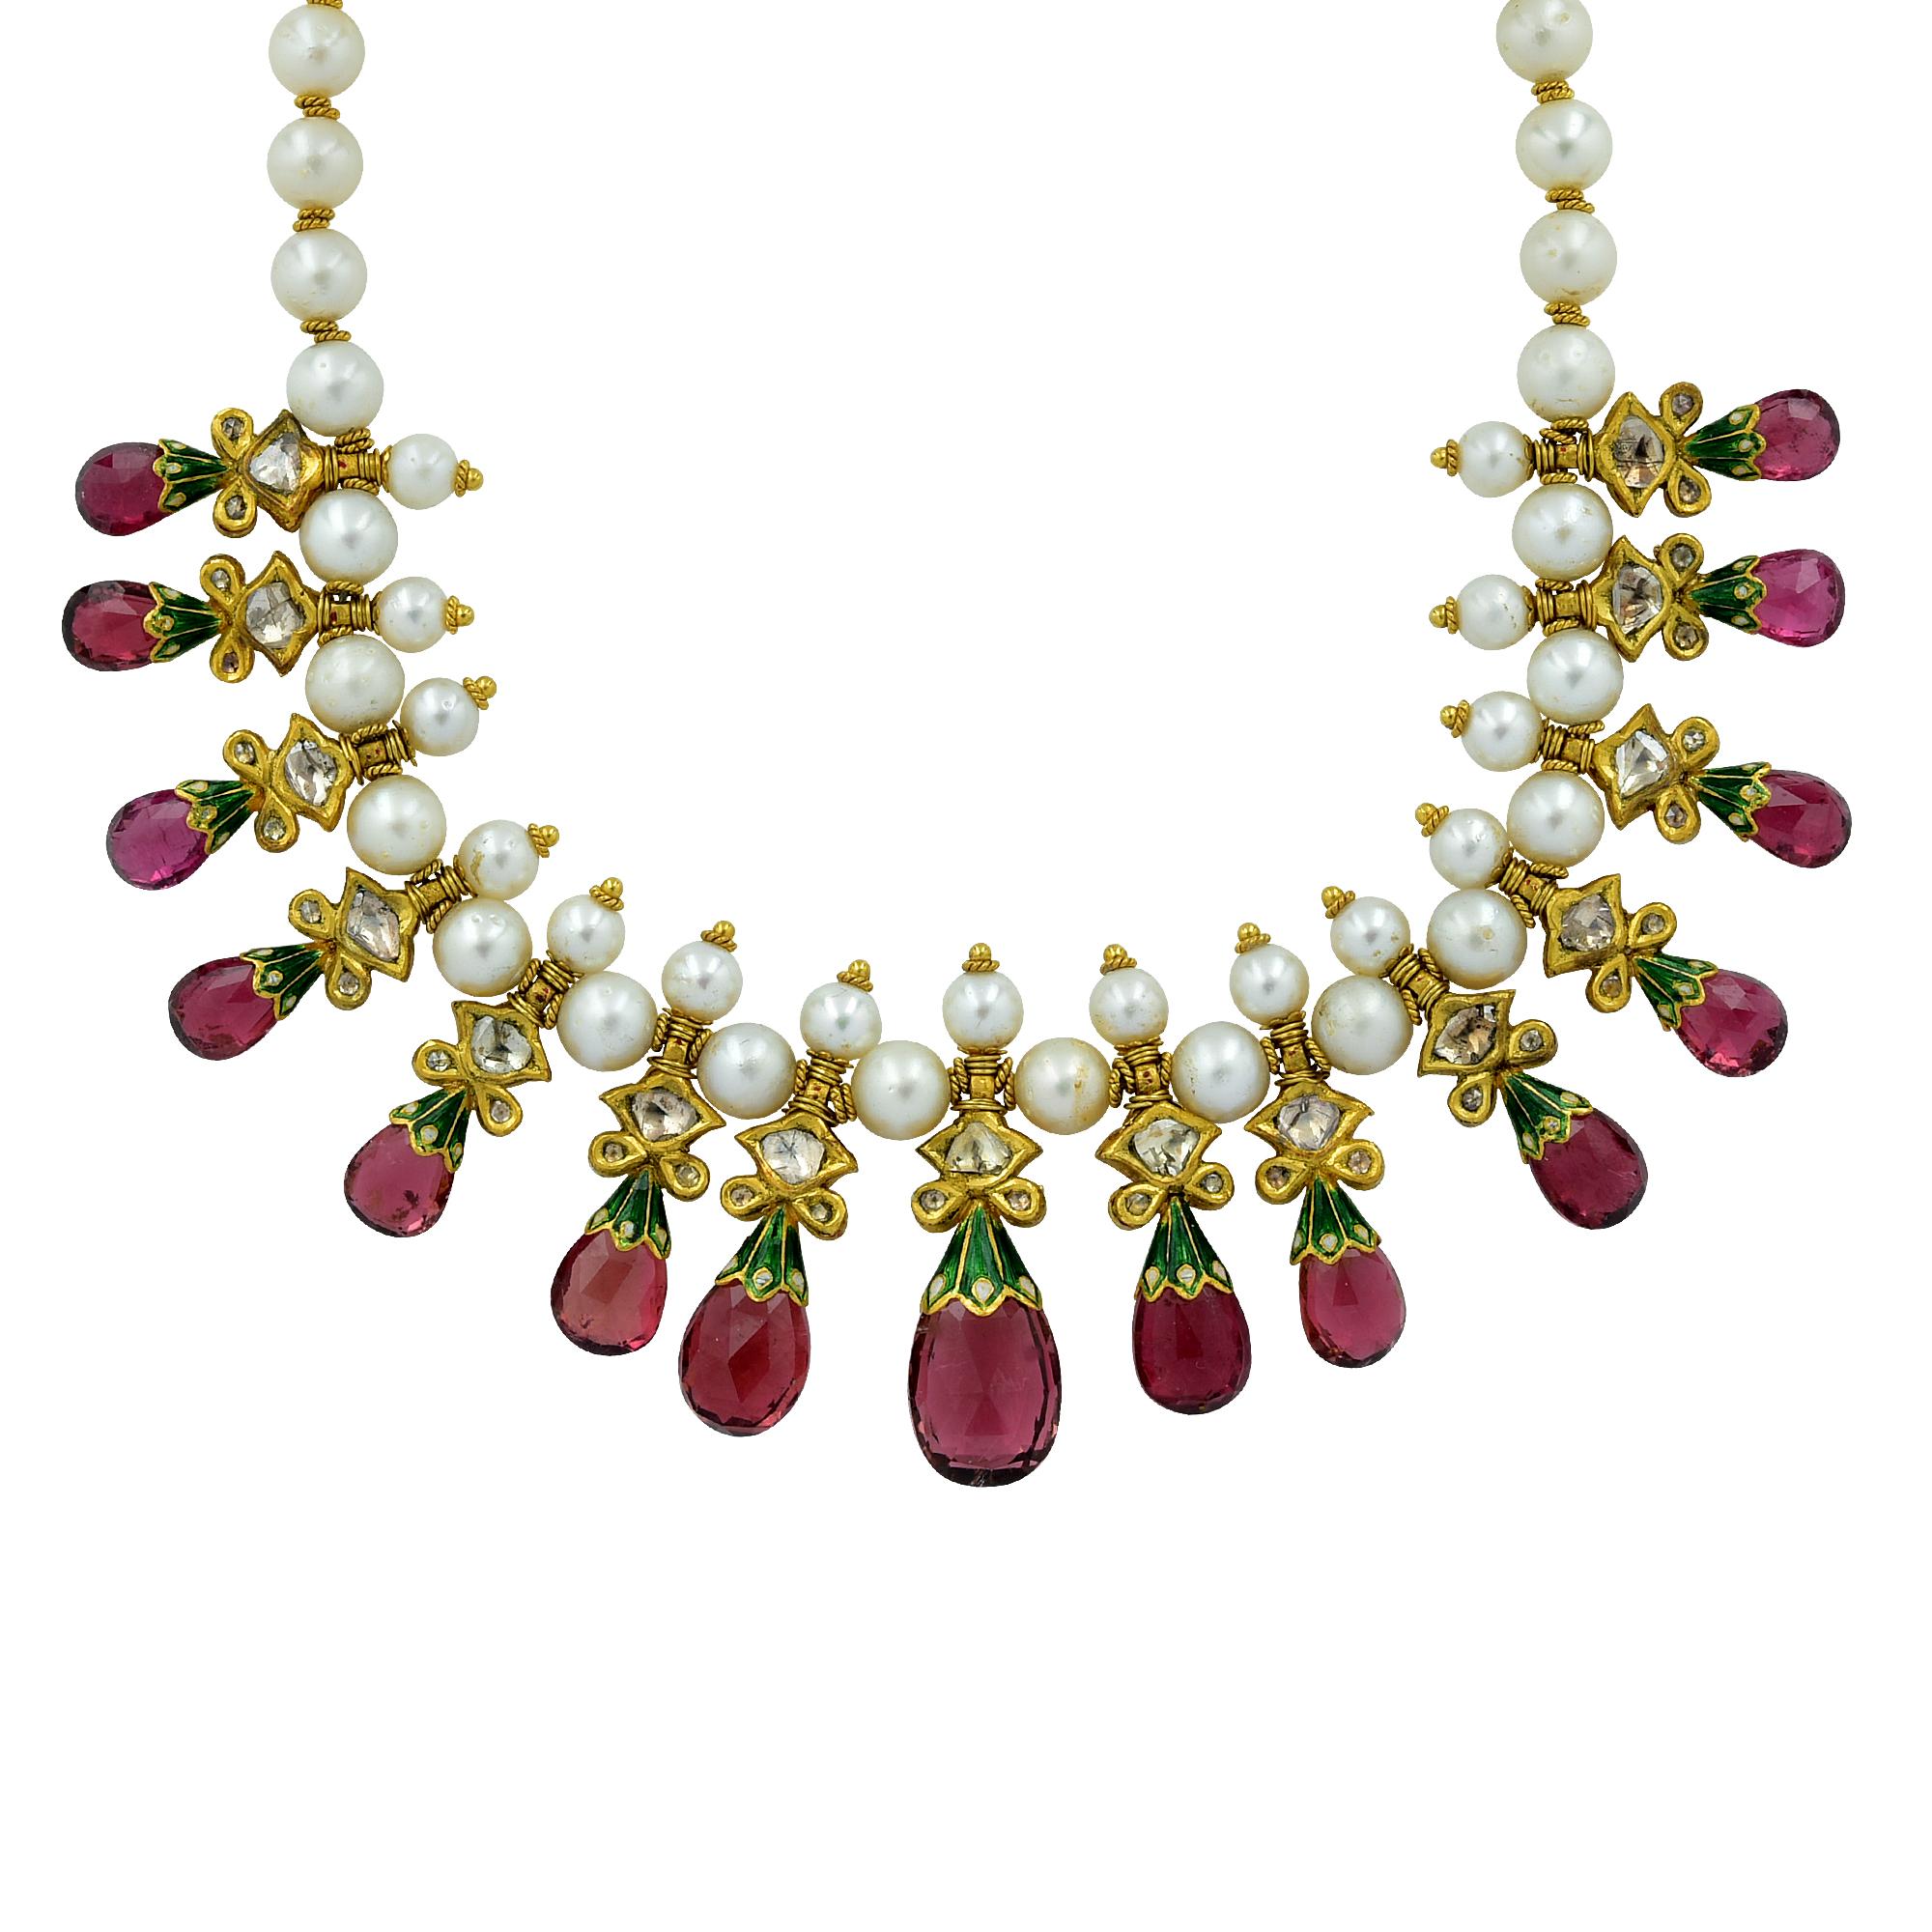 Women's Diamond, Amethyst, Peal and Enamel 22 Karat Bib Necklace